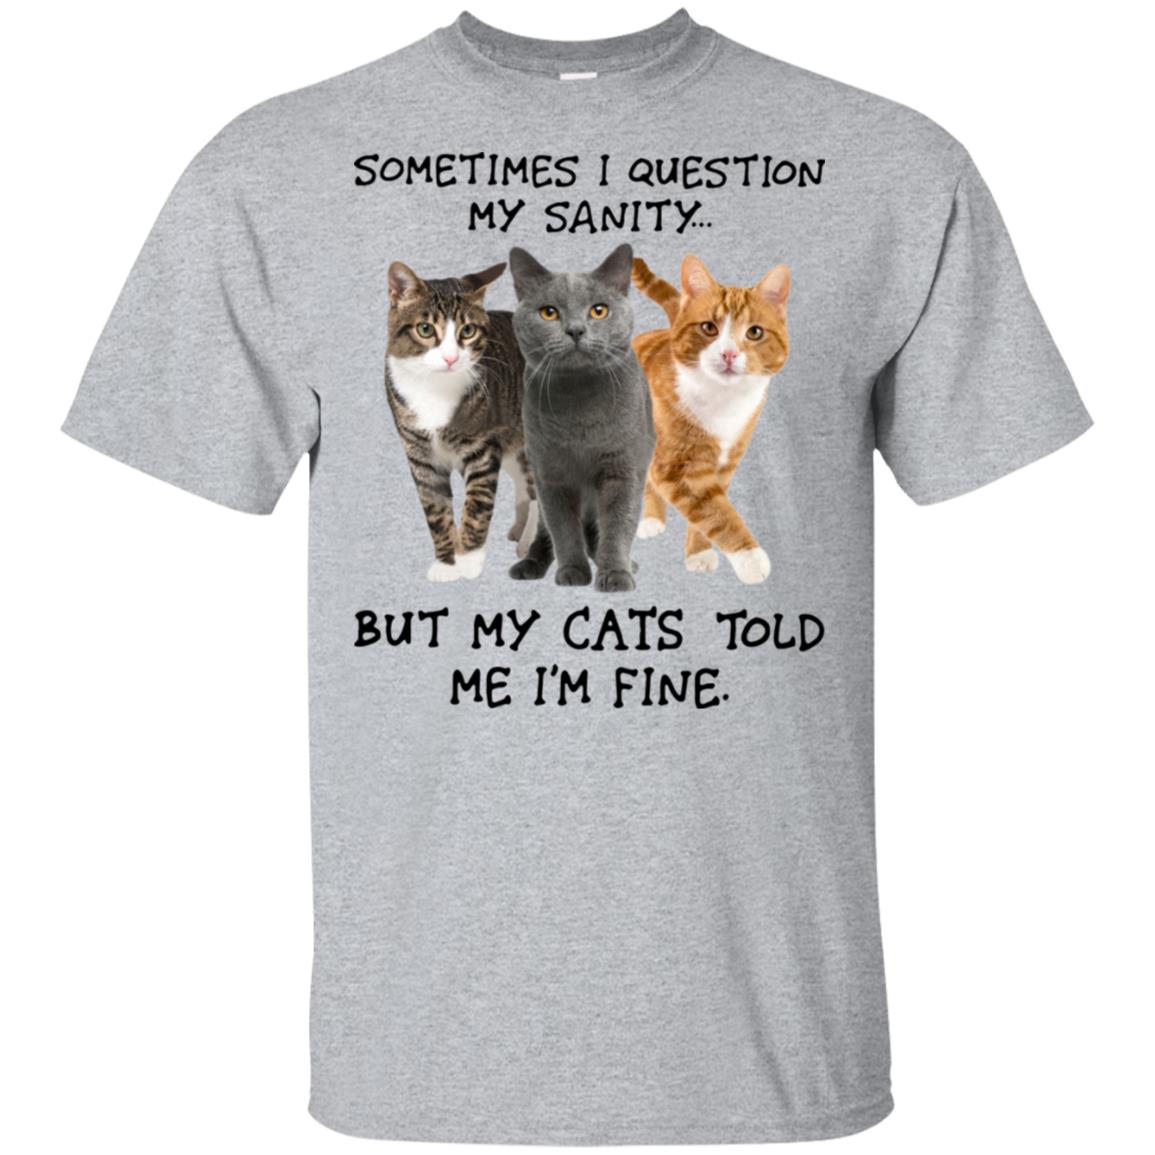 I question my sanity but my cats told me I'm fine shirt - RobinPlaceFabrics